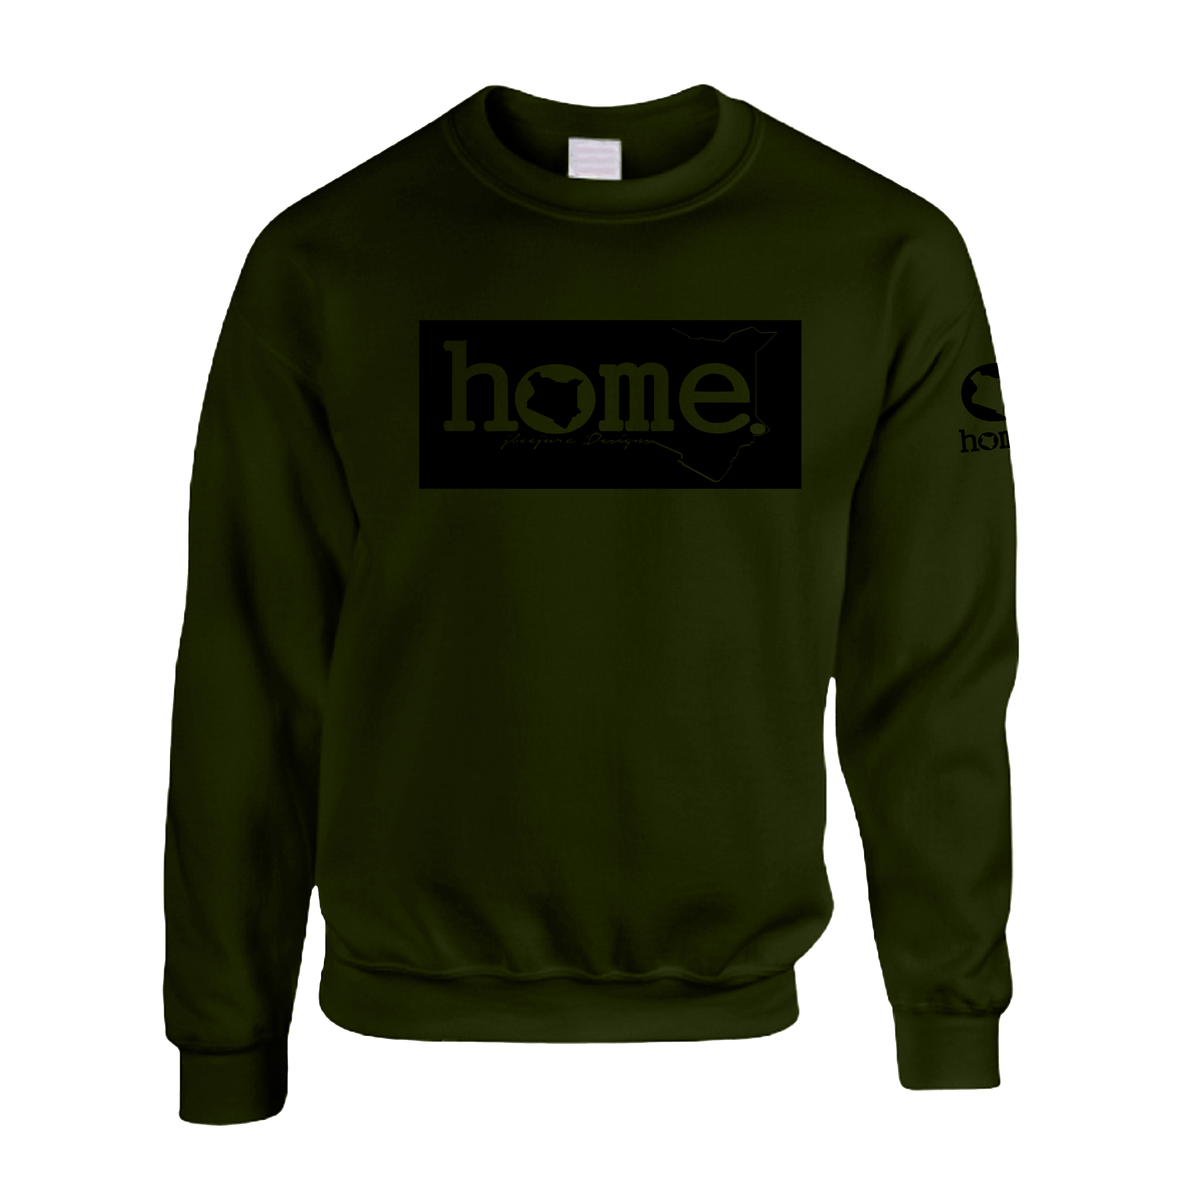 Sweatshirt - Jungle Green (Heavy Fabric)